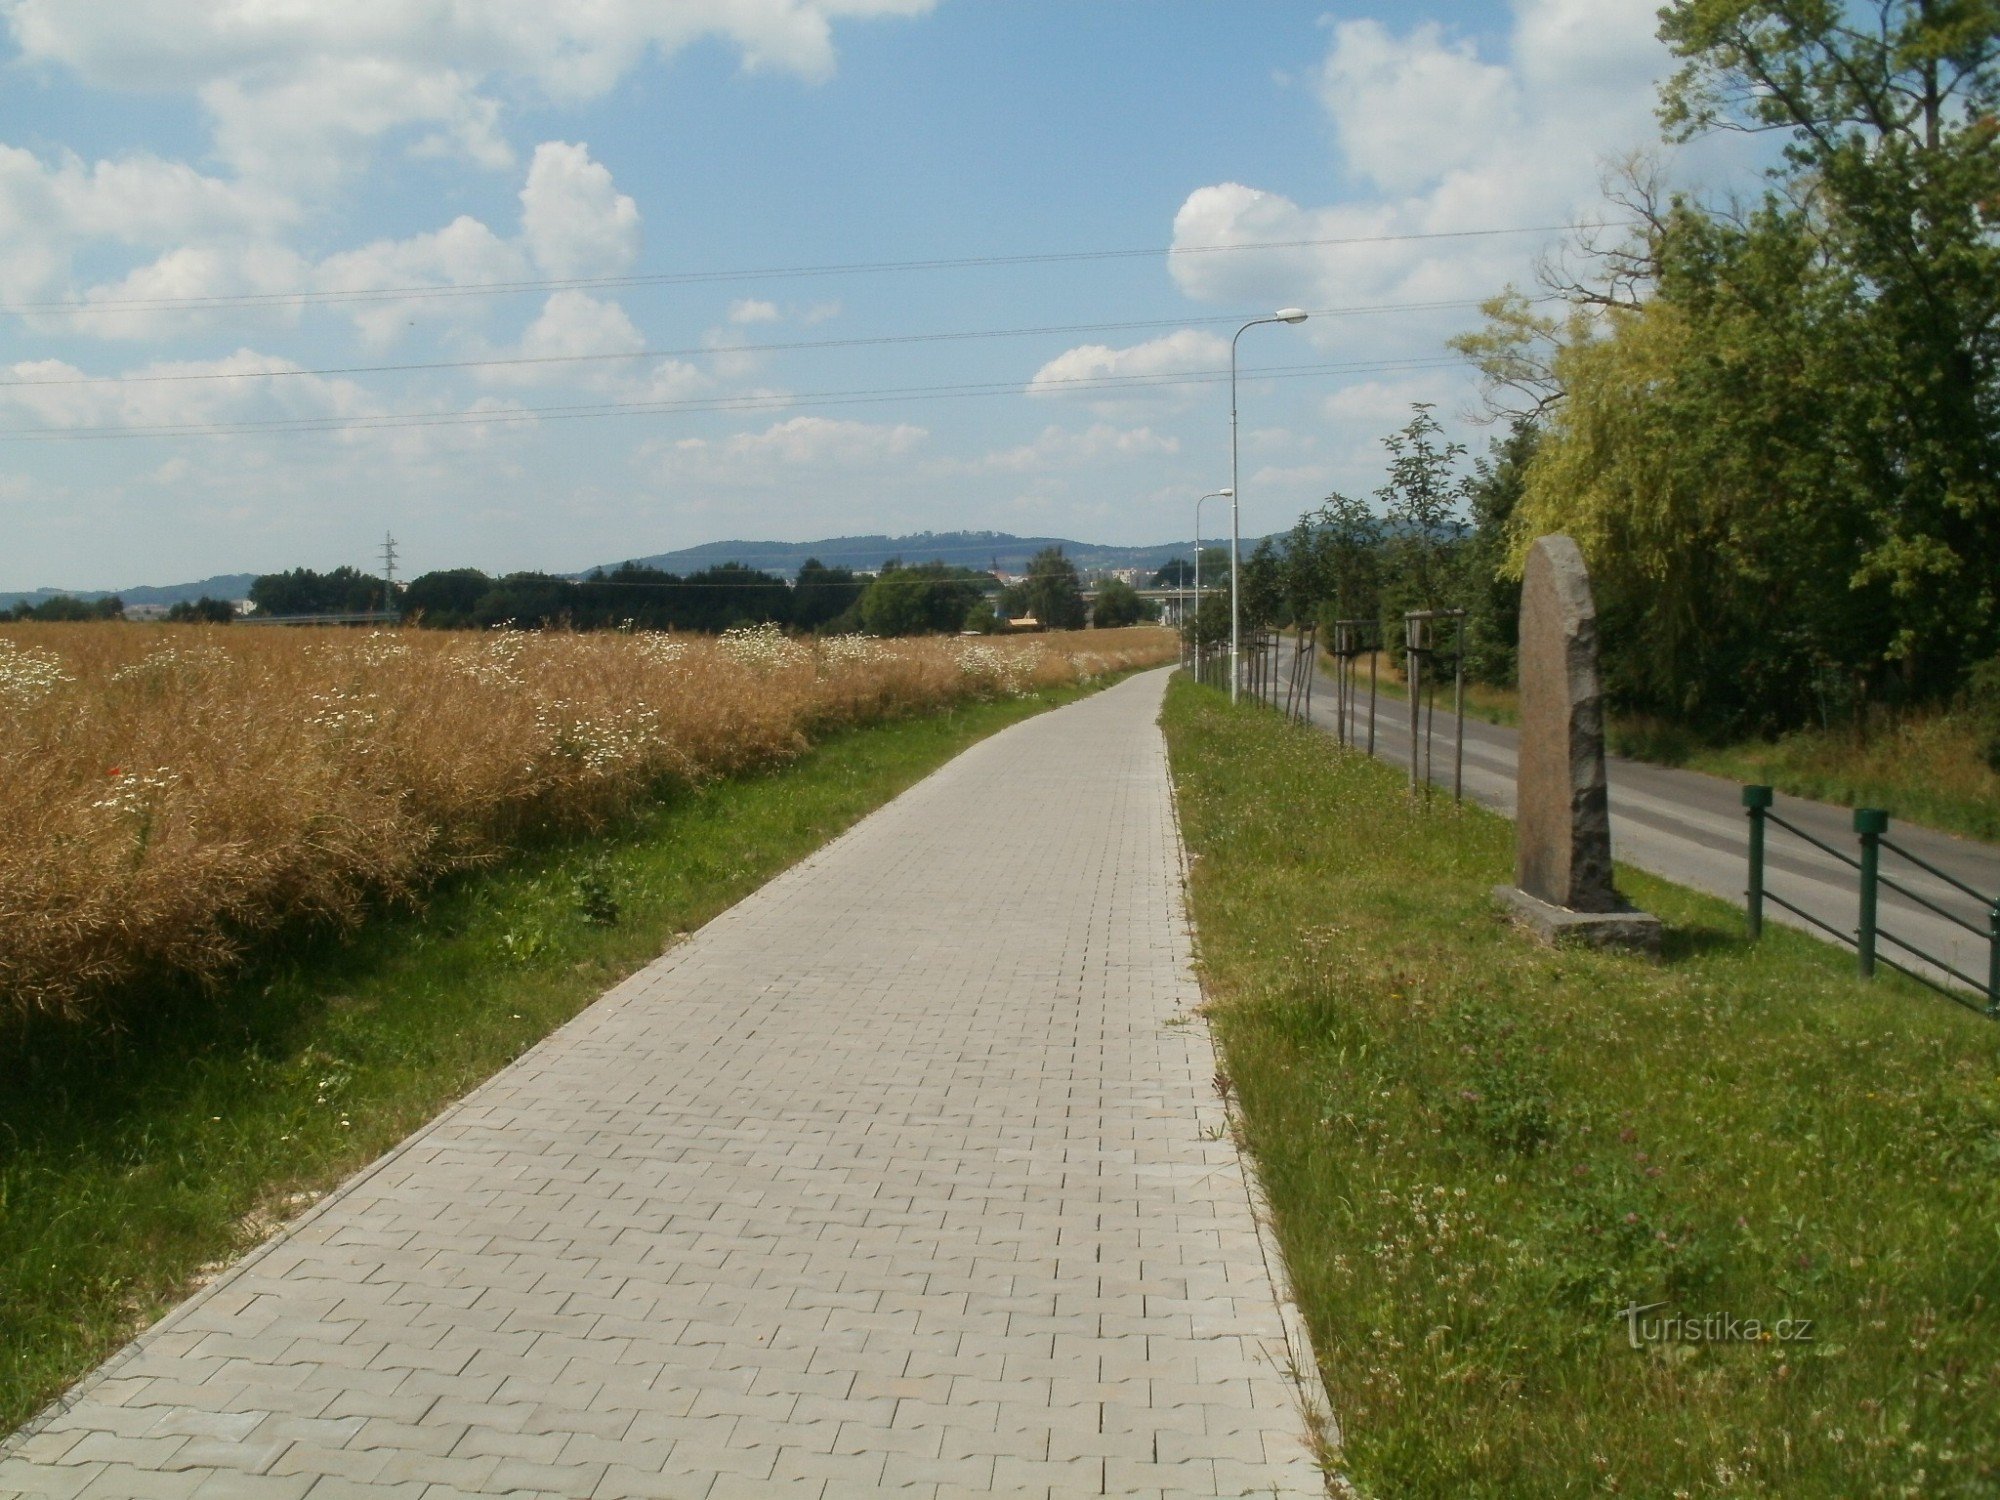 Popovice - Jičín cycle path